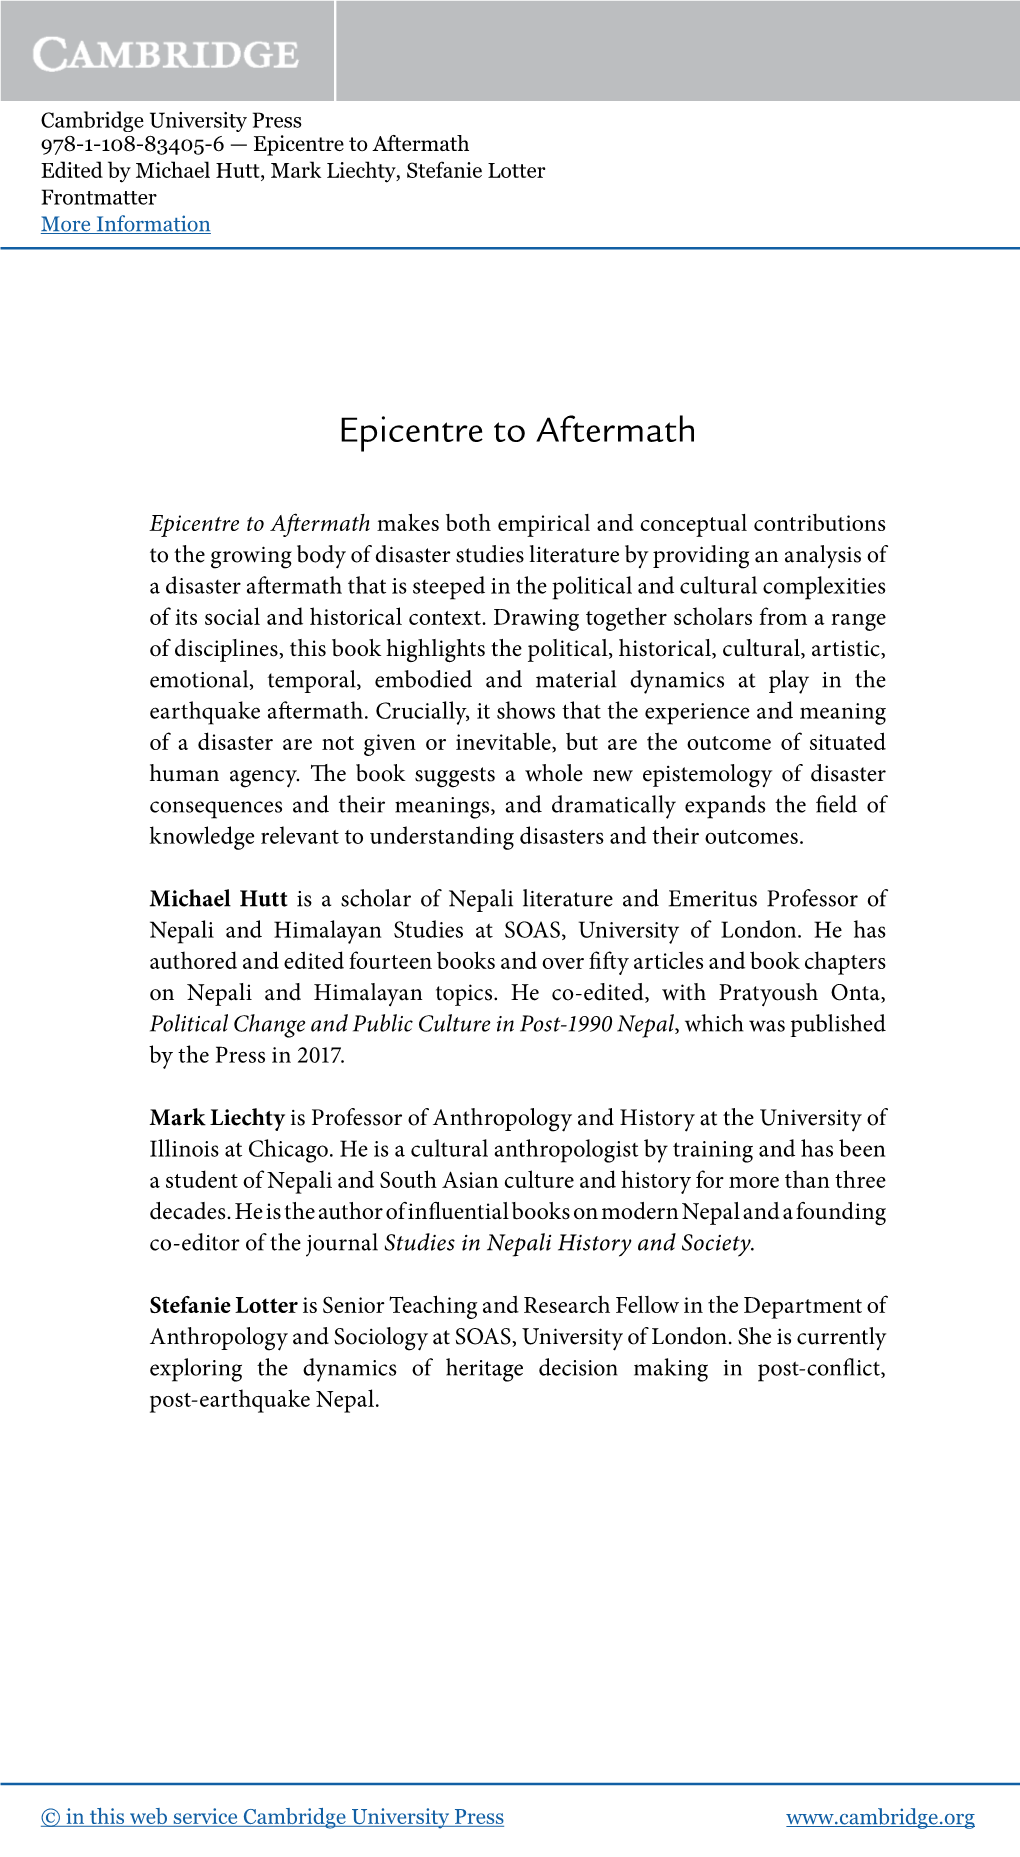 Epicentre to Aftermath Edited by Michael Hutt, Mark Liechty, Stefanie Lotter Frontmatter More Information